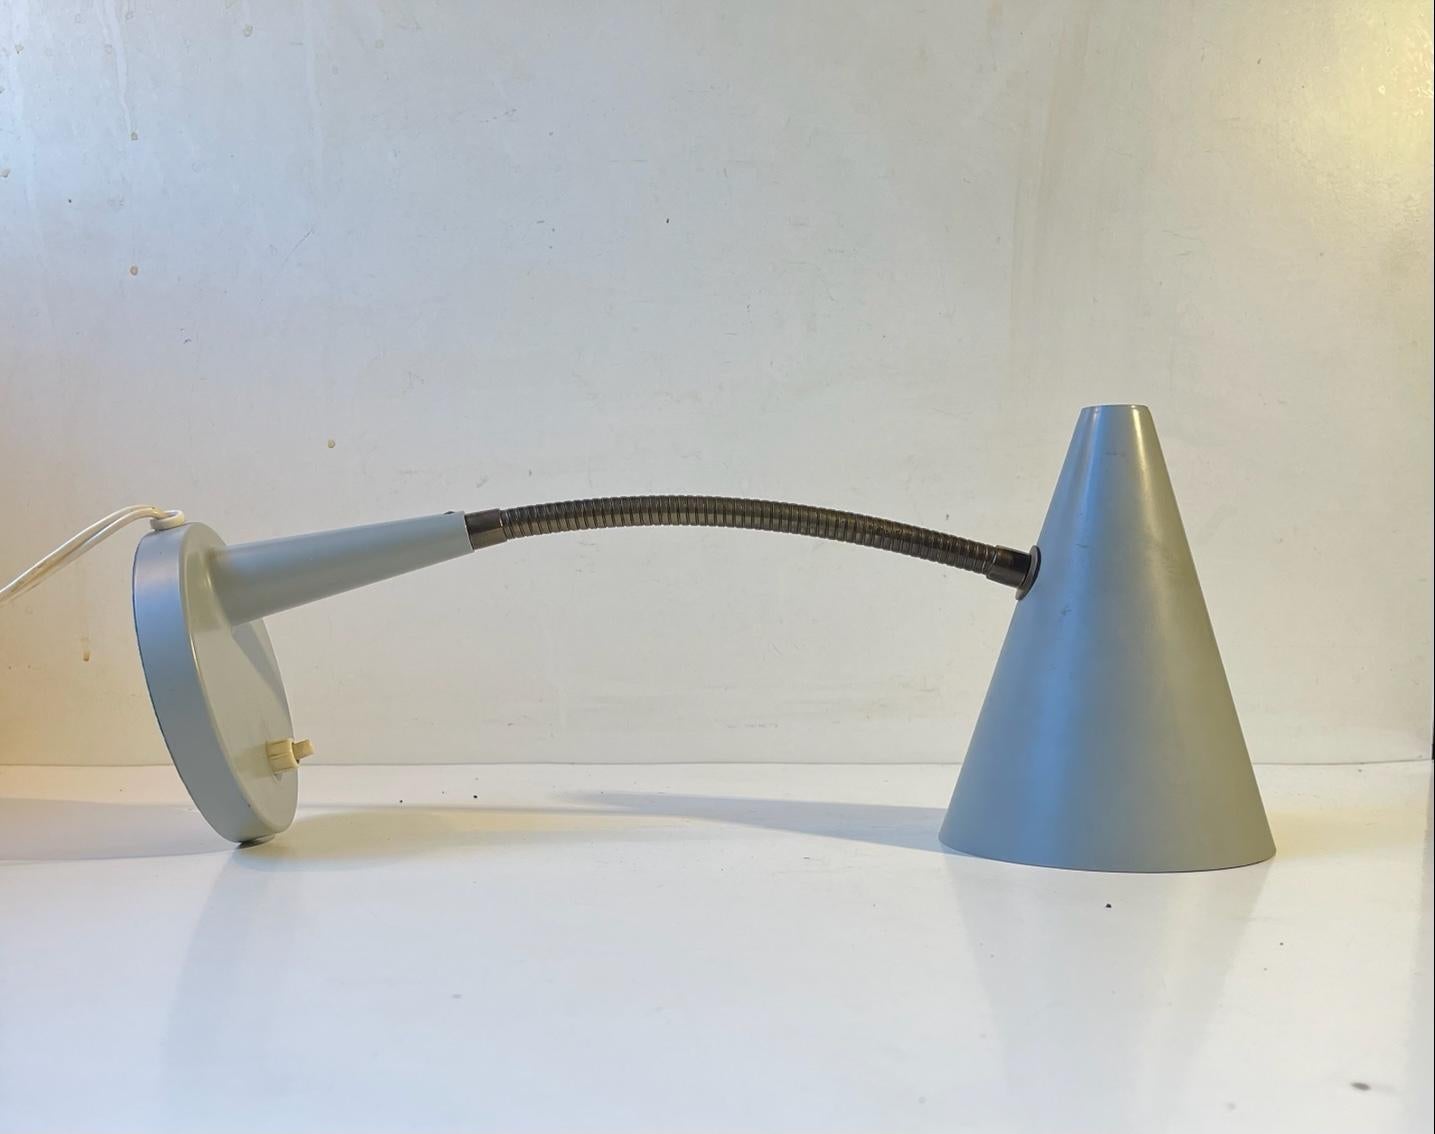 Skandinavische Tisch- oder Wandlampe Graugrau von E. S. Horn, 1950er Jahre (Aluminium) im Angebot